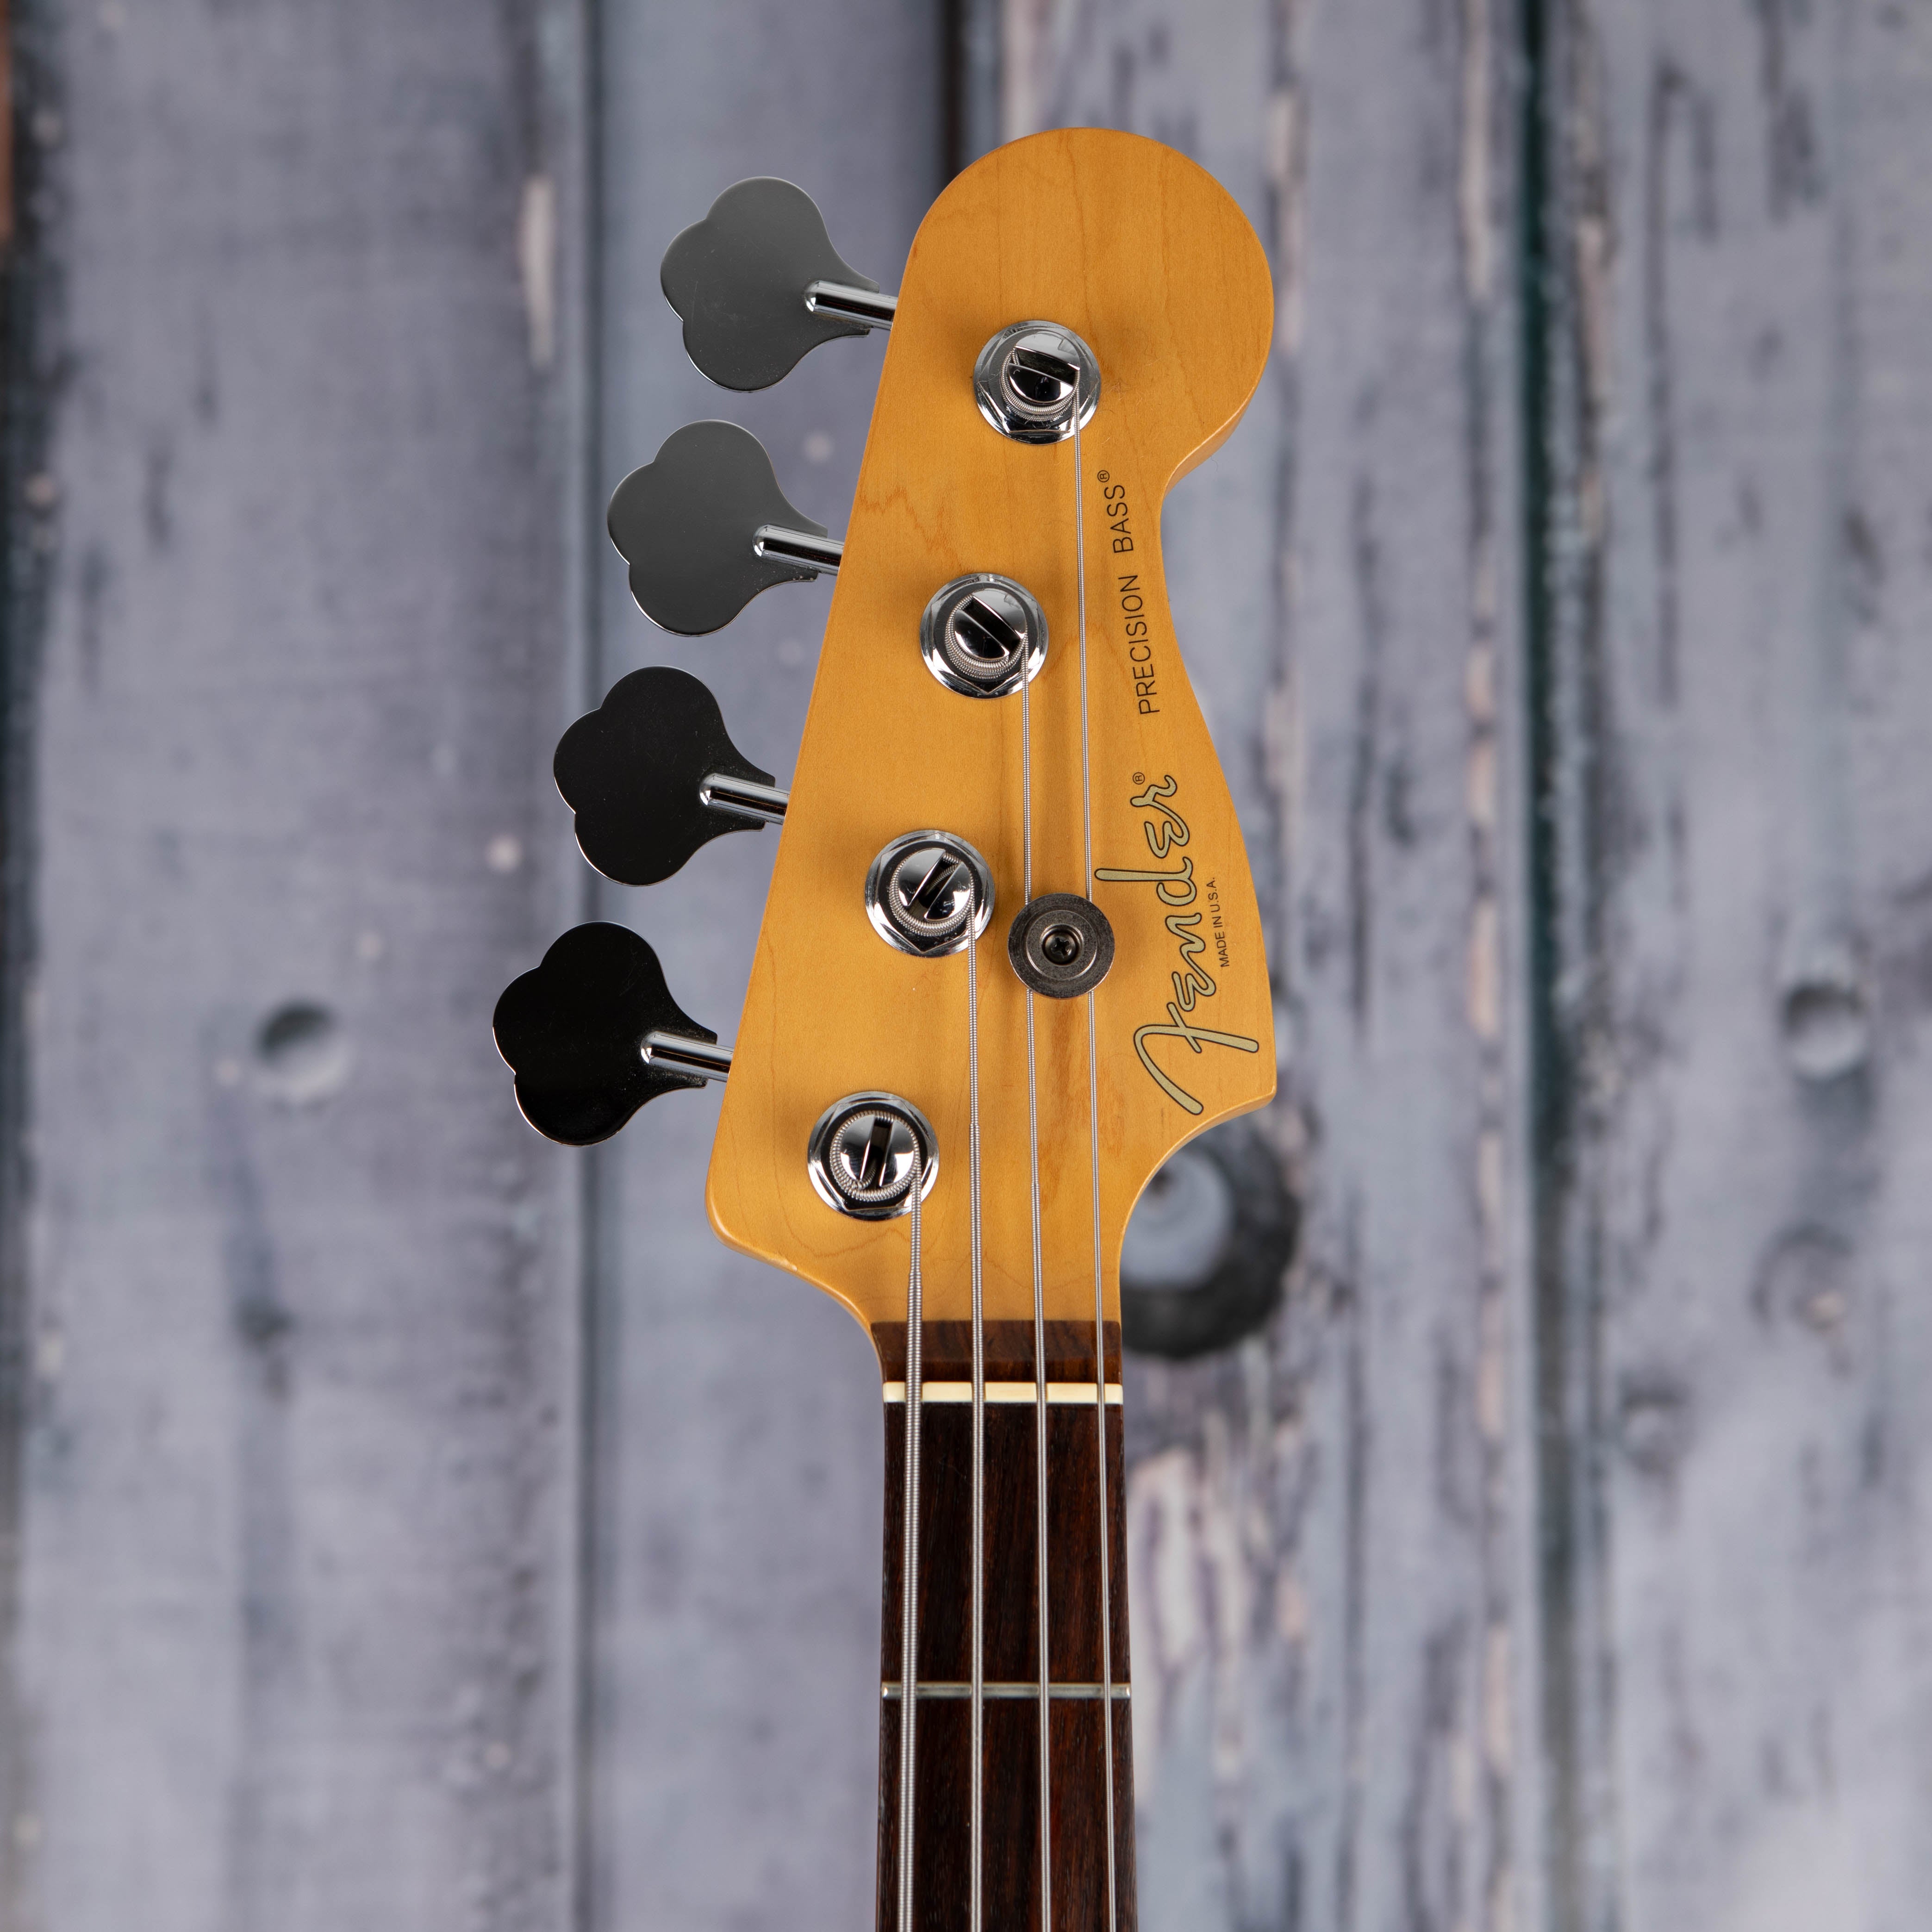 Used Fender American Standard Precision Bass Guitar, 1995, Brown Sunburst, front headstock